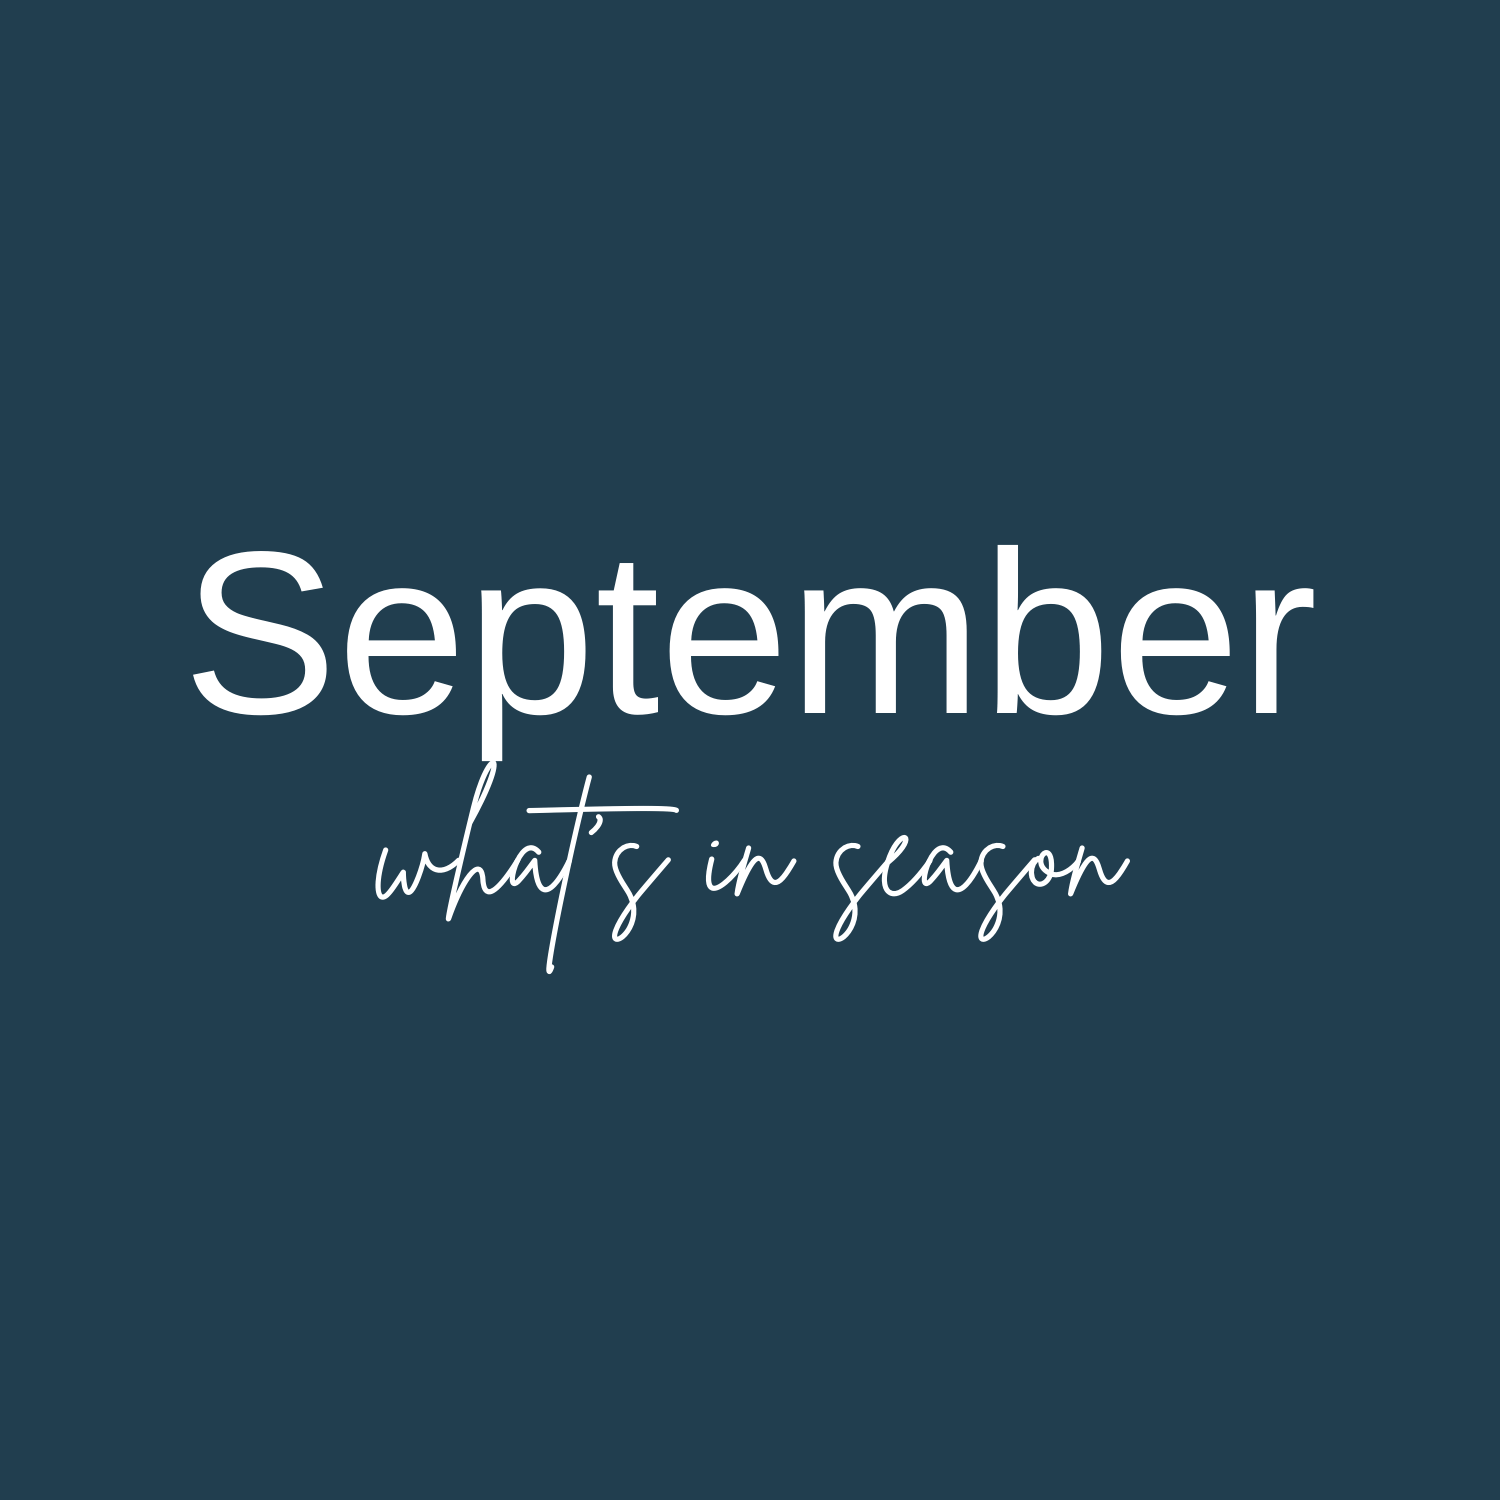 -What’s in Season in September?